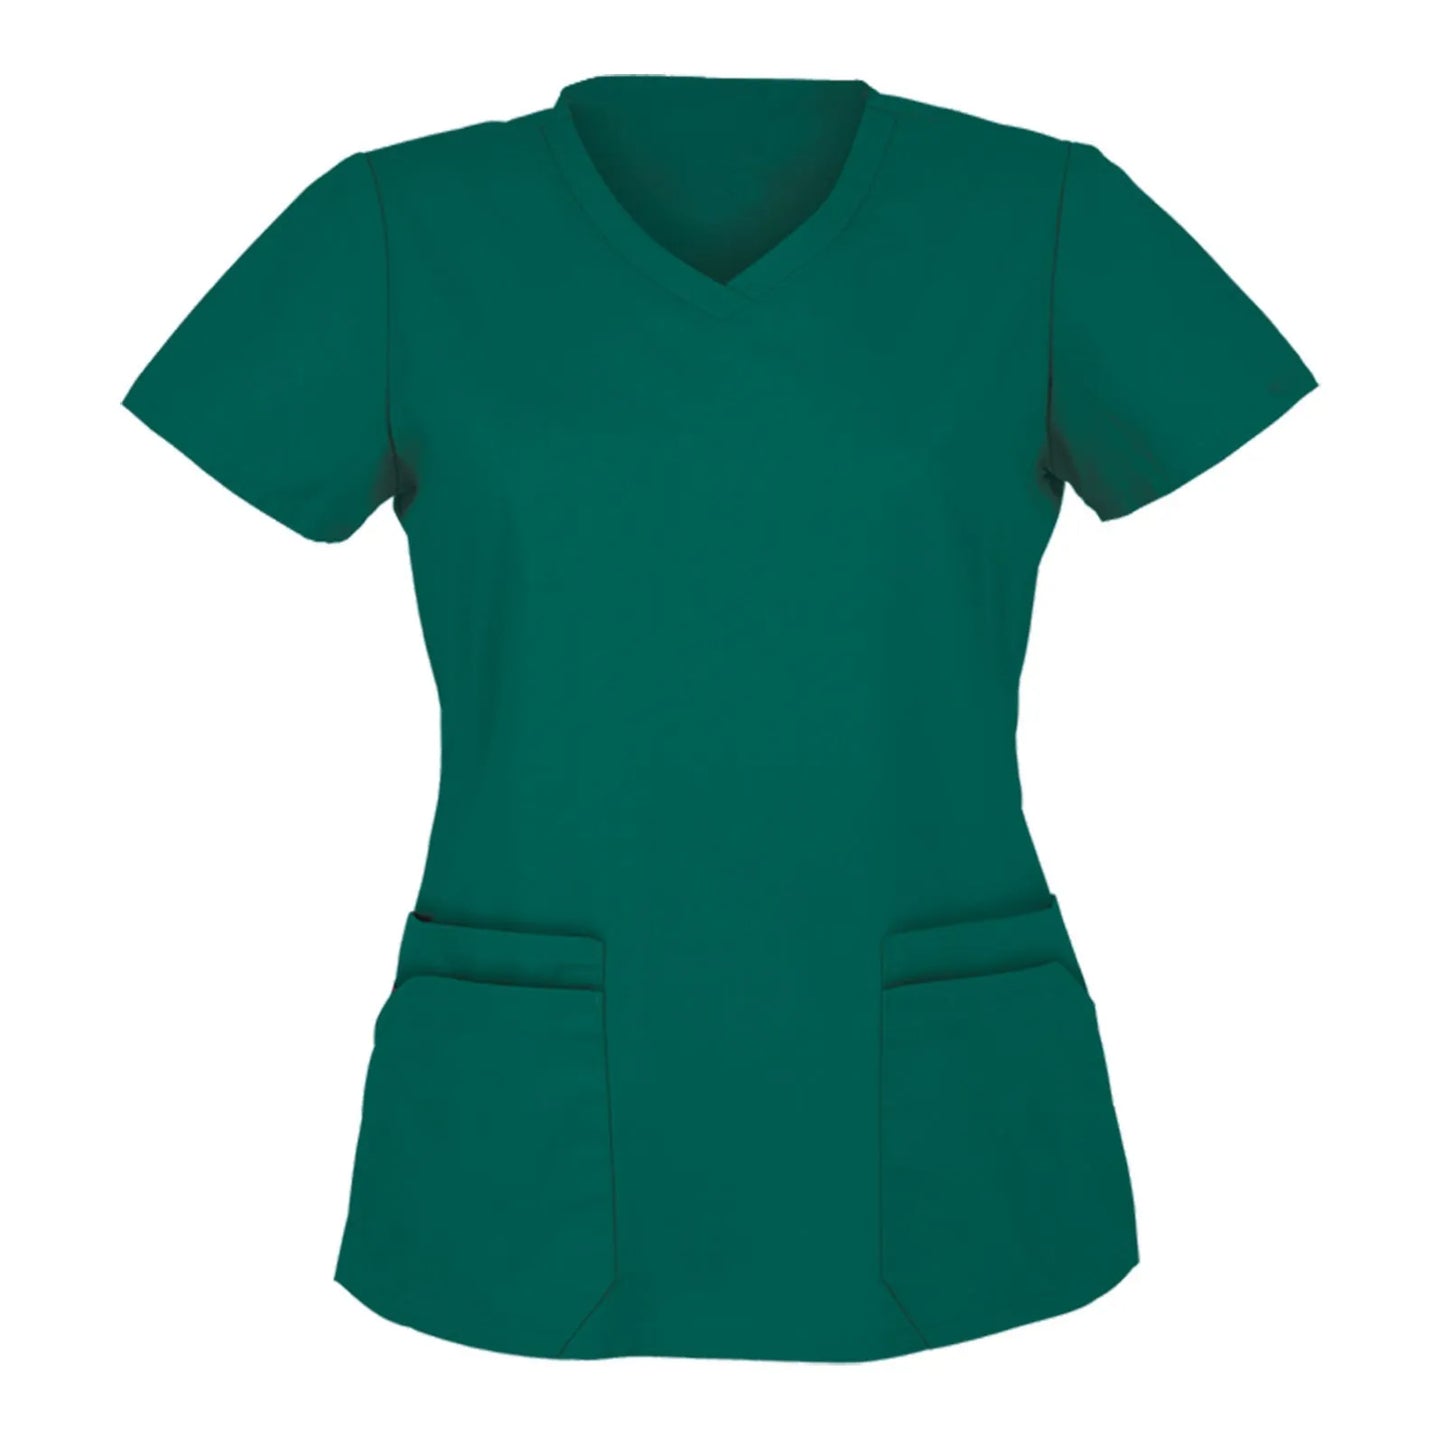 Nursing Scrubs Tops Women Medical Scrubs Short Sleeve V-Neck Top